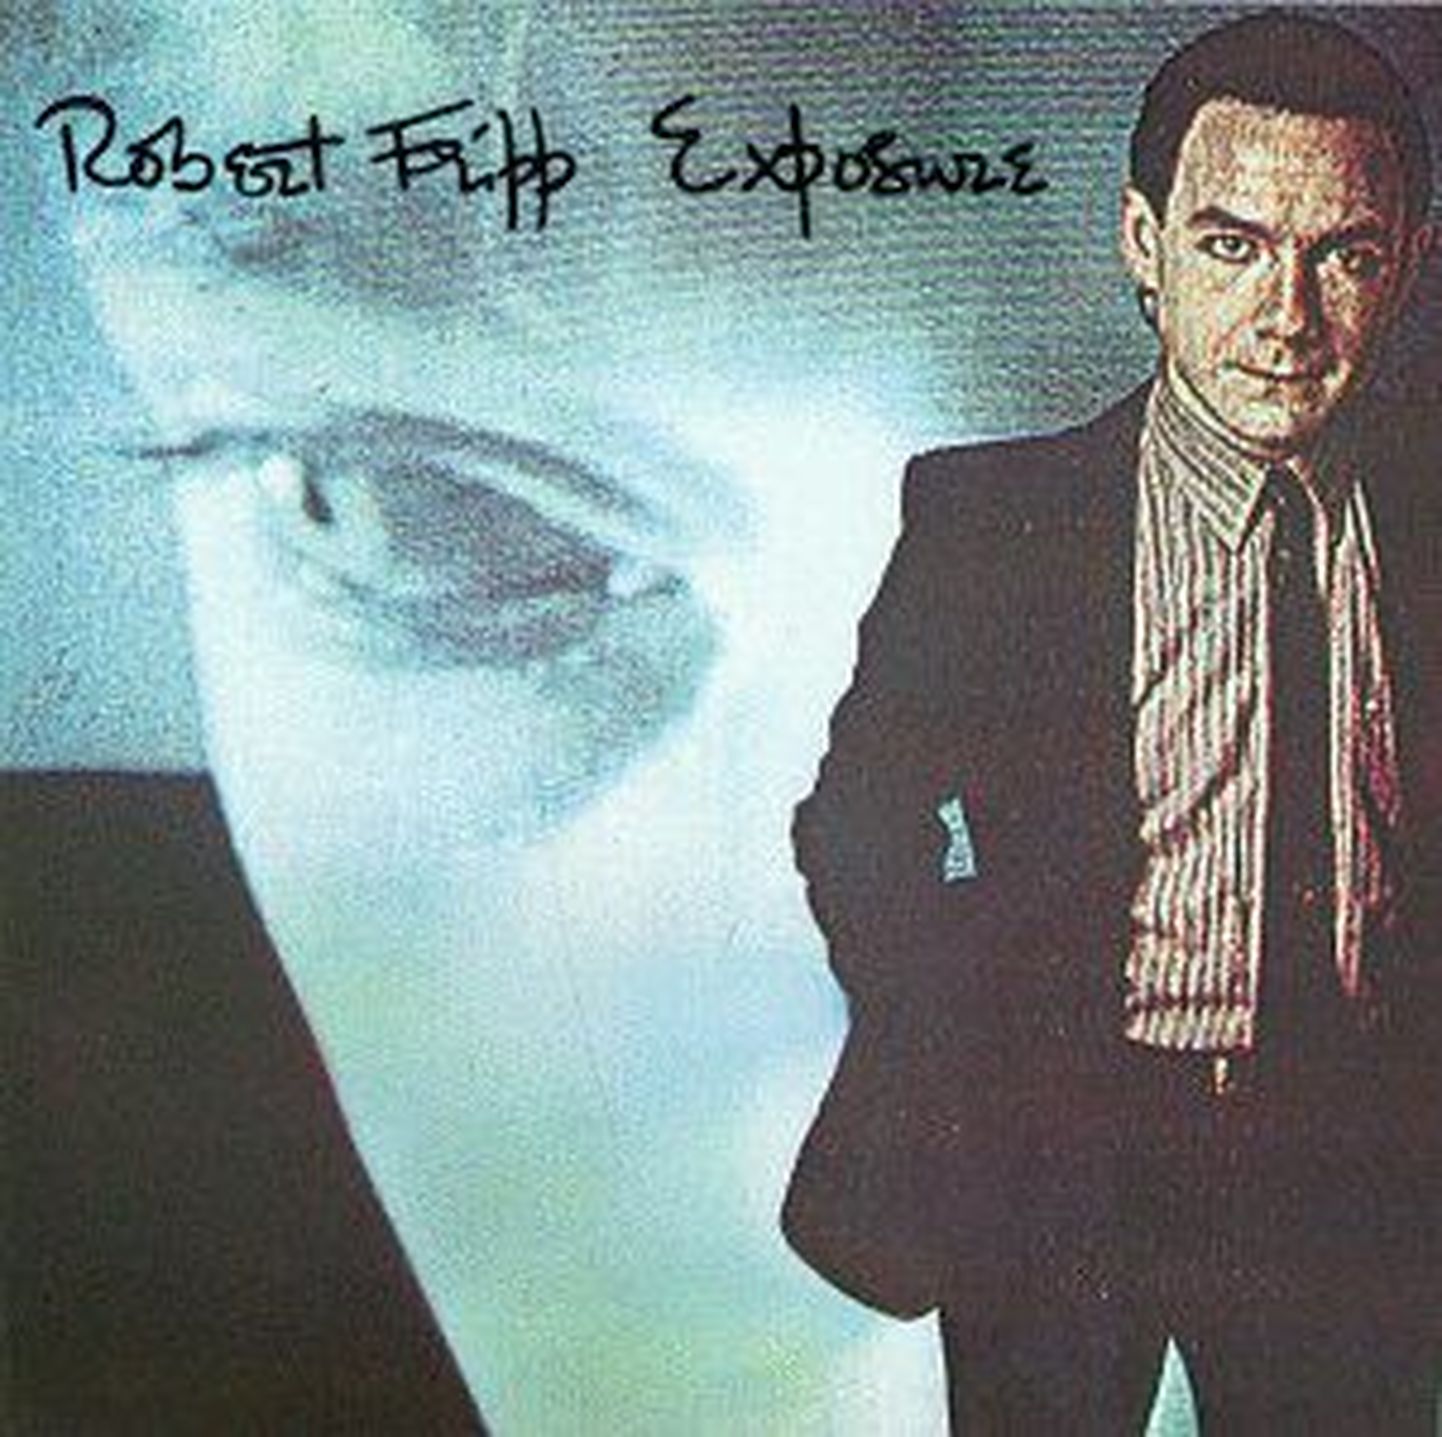 Briti kitarristi Robert Frippi plaat «Exposure».